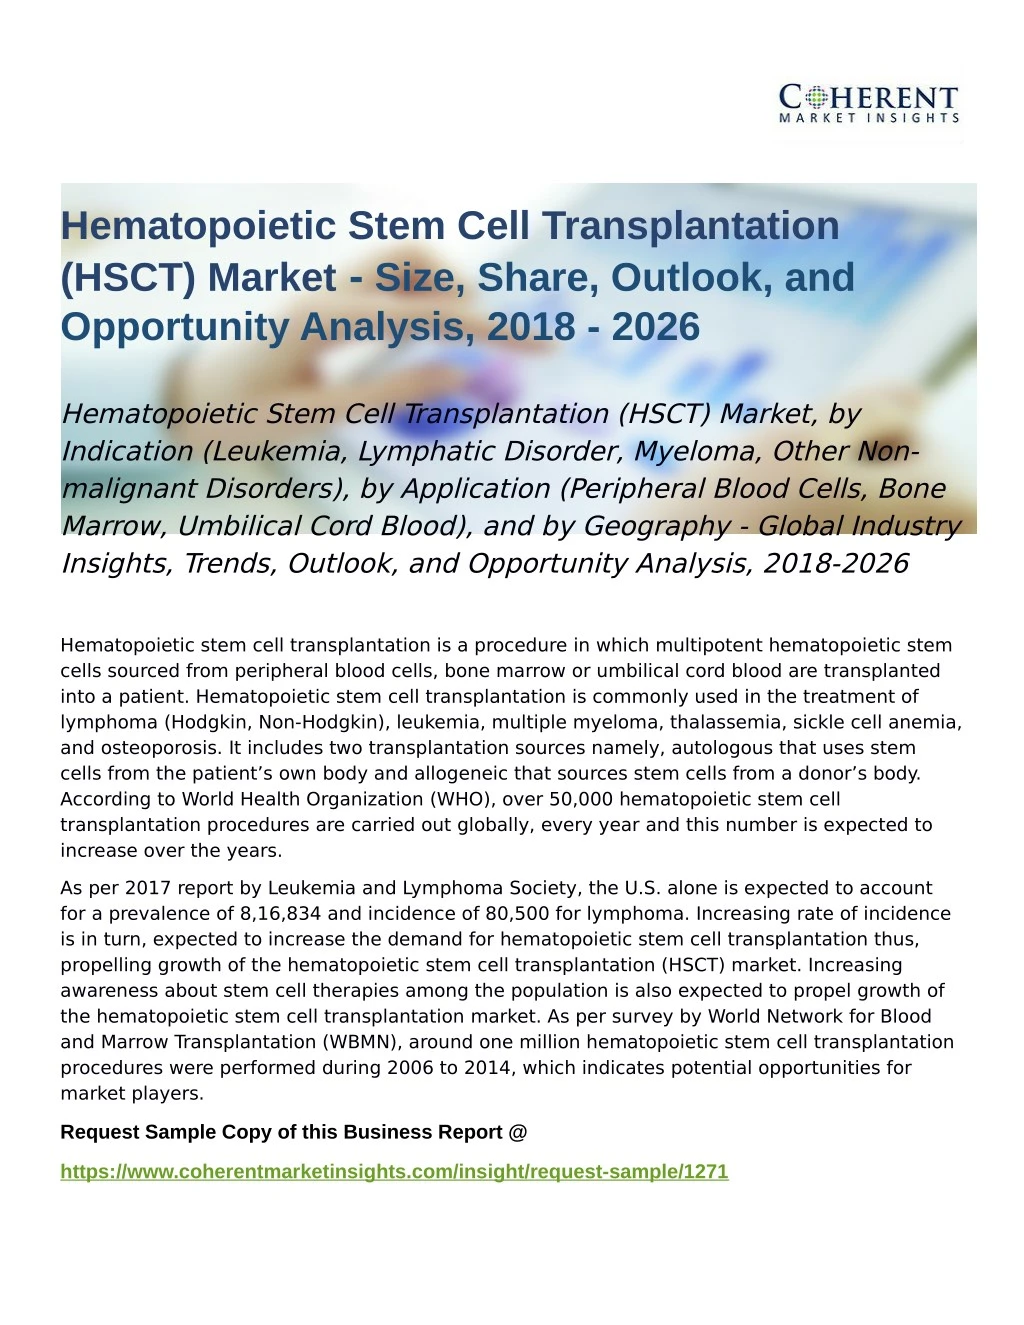 hematopoietic stem cell transplantation hsct